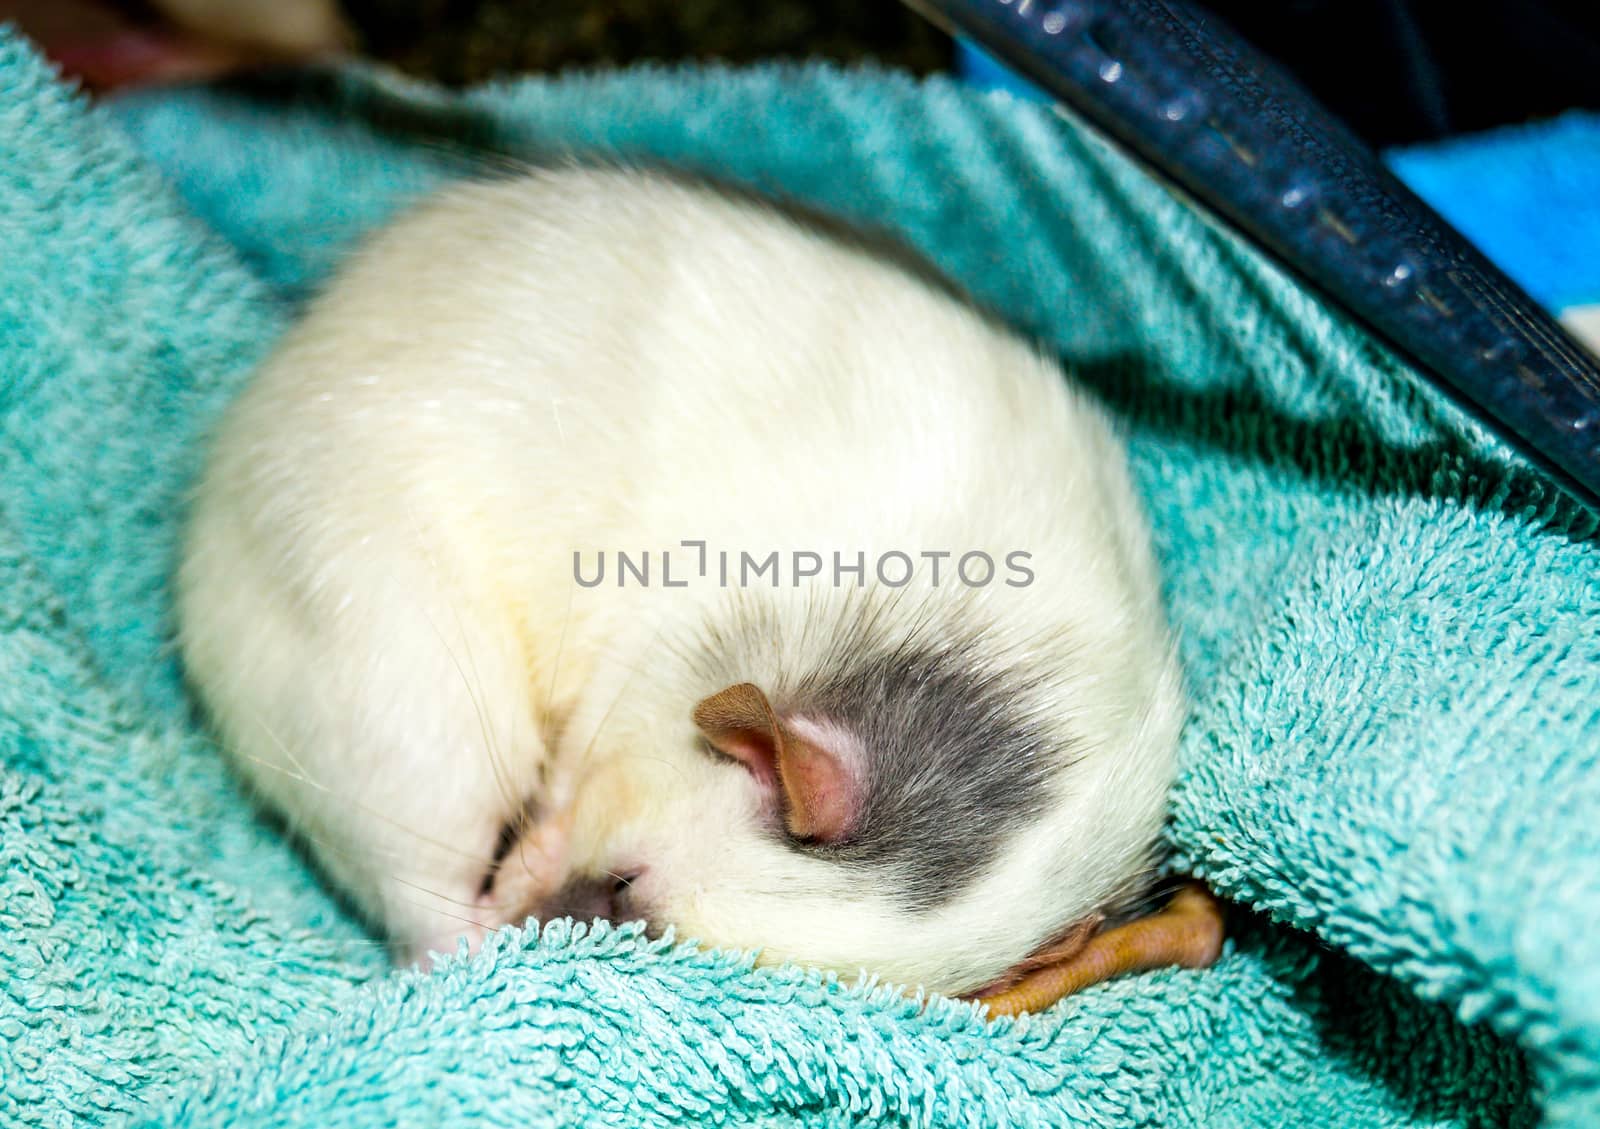 White dumbo rat curled up sleeping